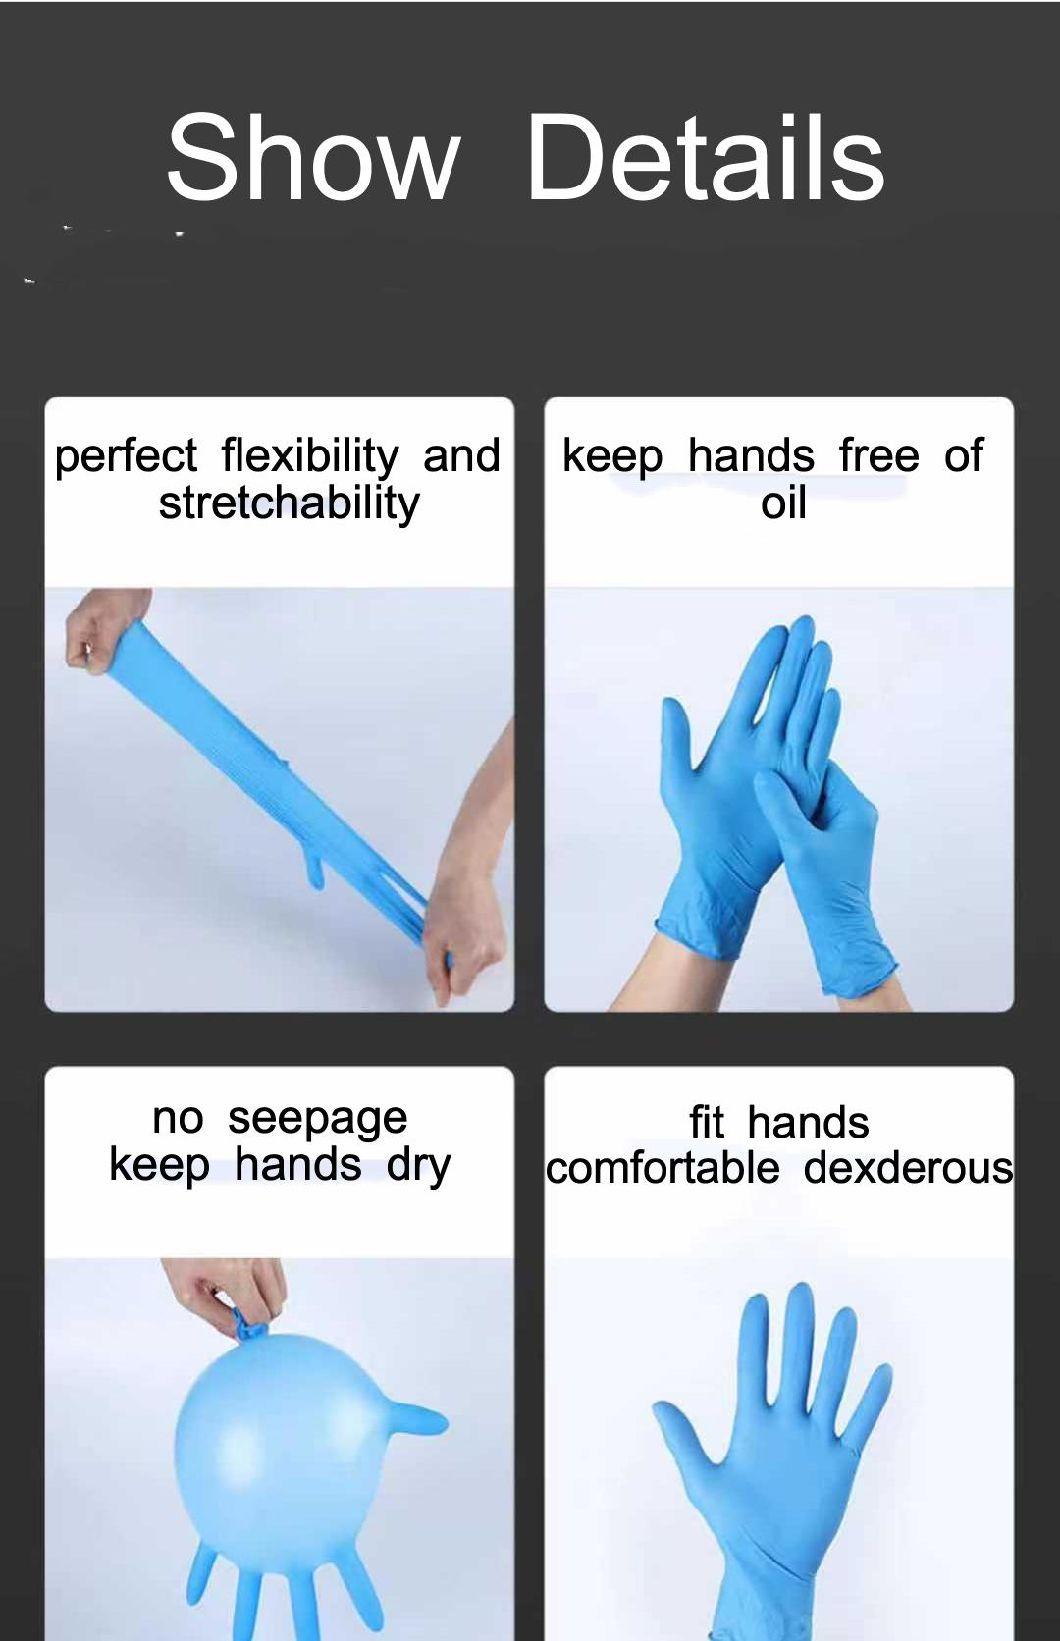 Powder Free Disposable Nitrile Blend Gloves Nedical Nitrile Gloves